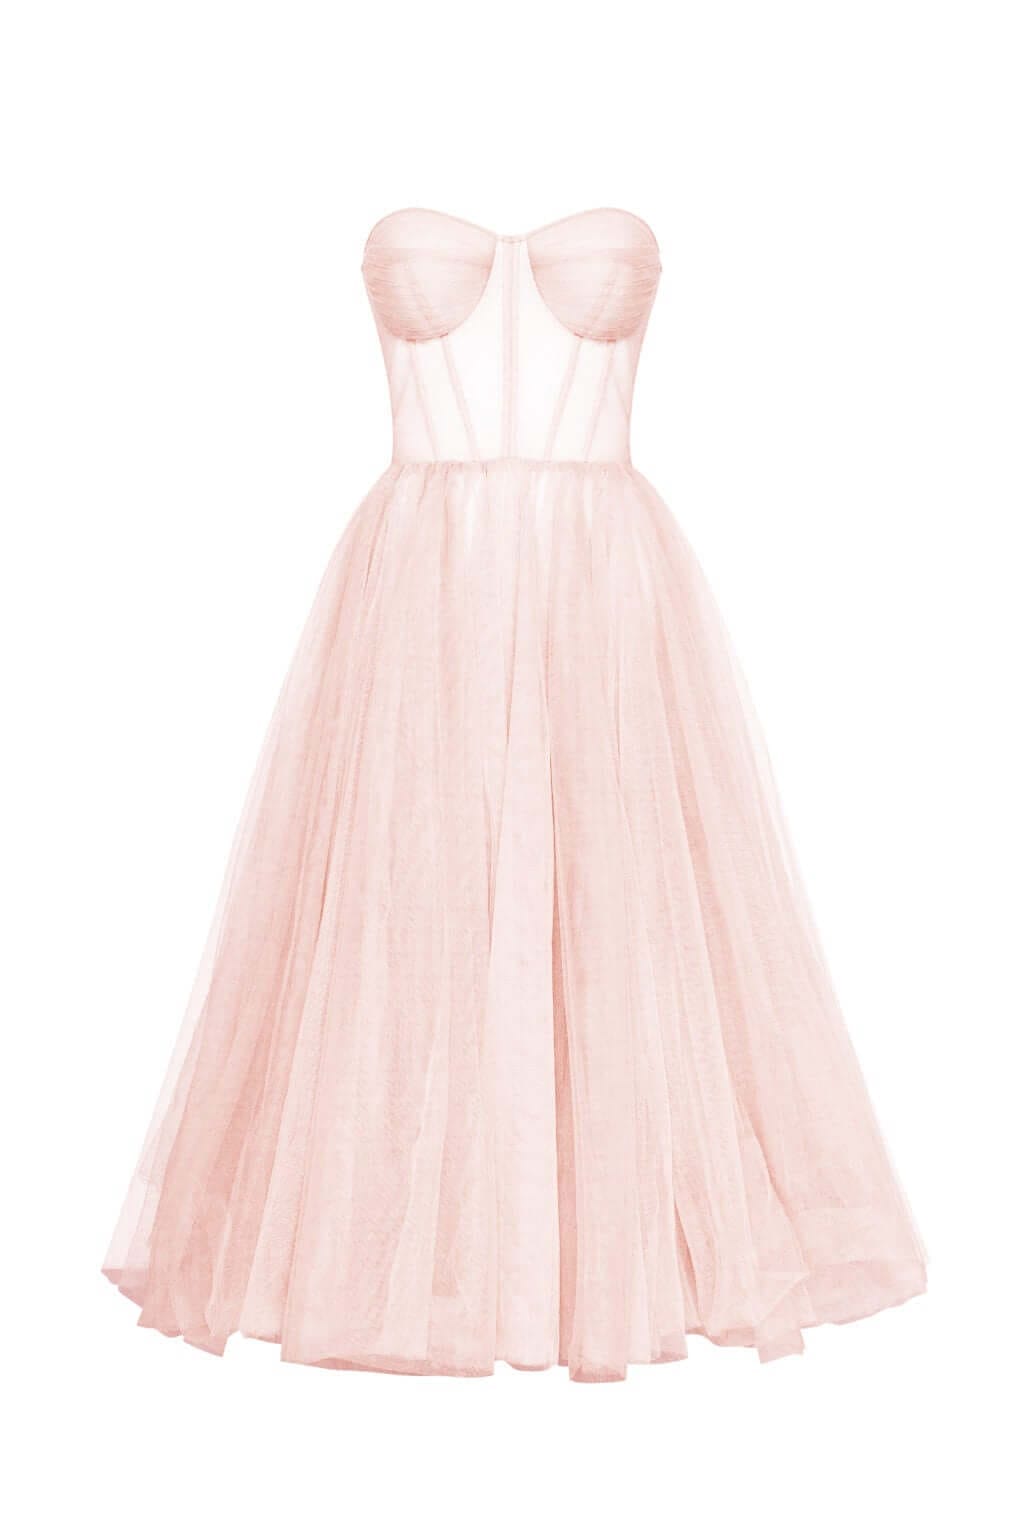 Misty Rose One-Shoulder Cocktail Tulle Dress ➤➤ Milla Dresses - USA,  Worldwide delivery